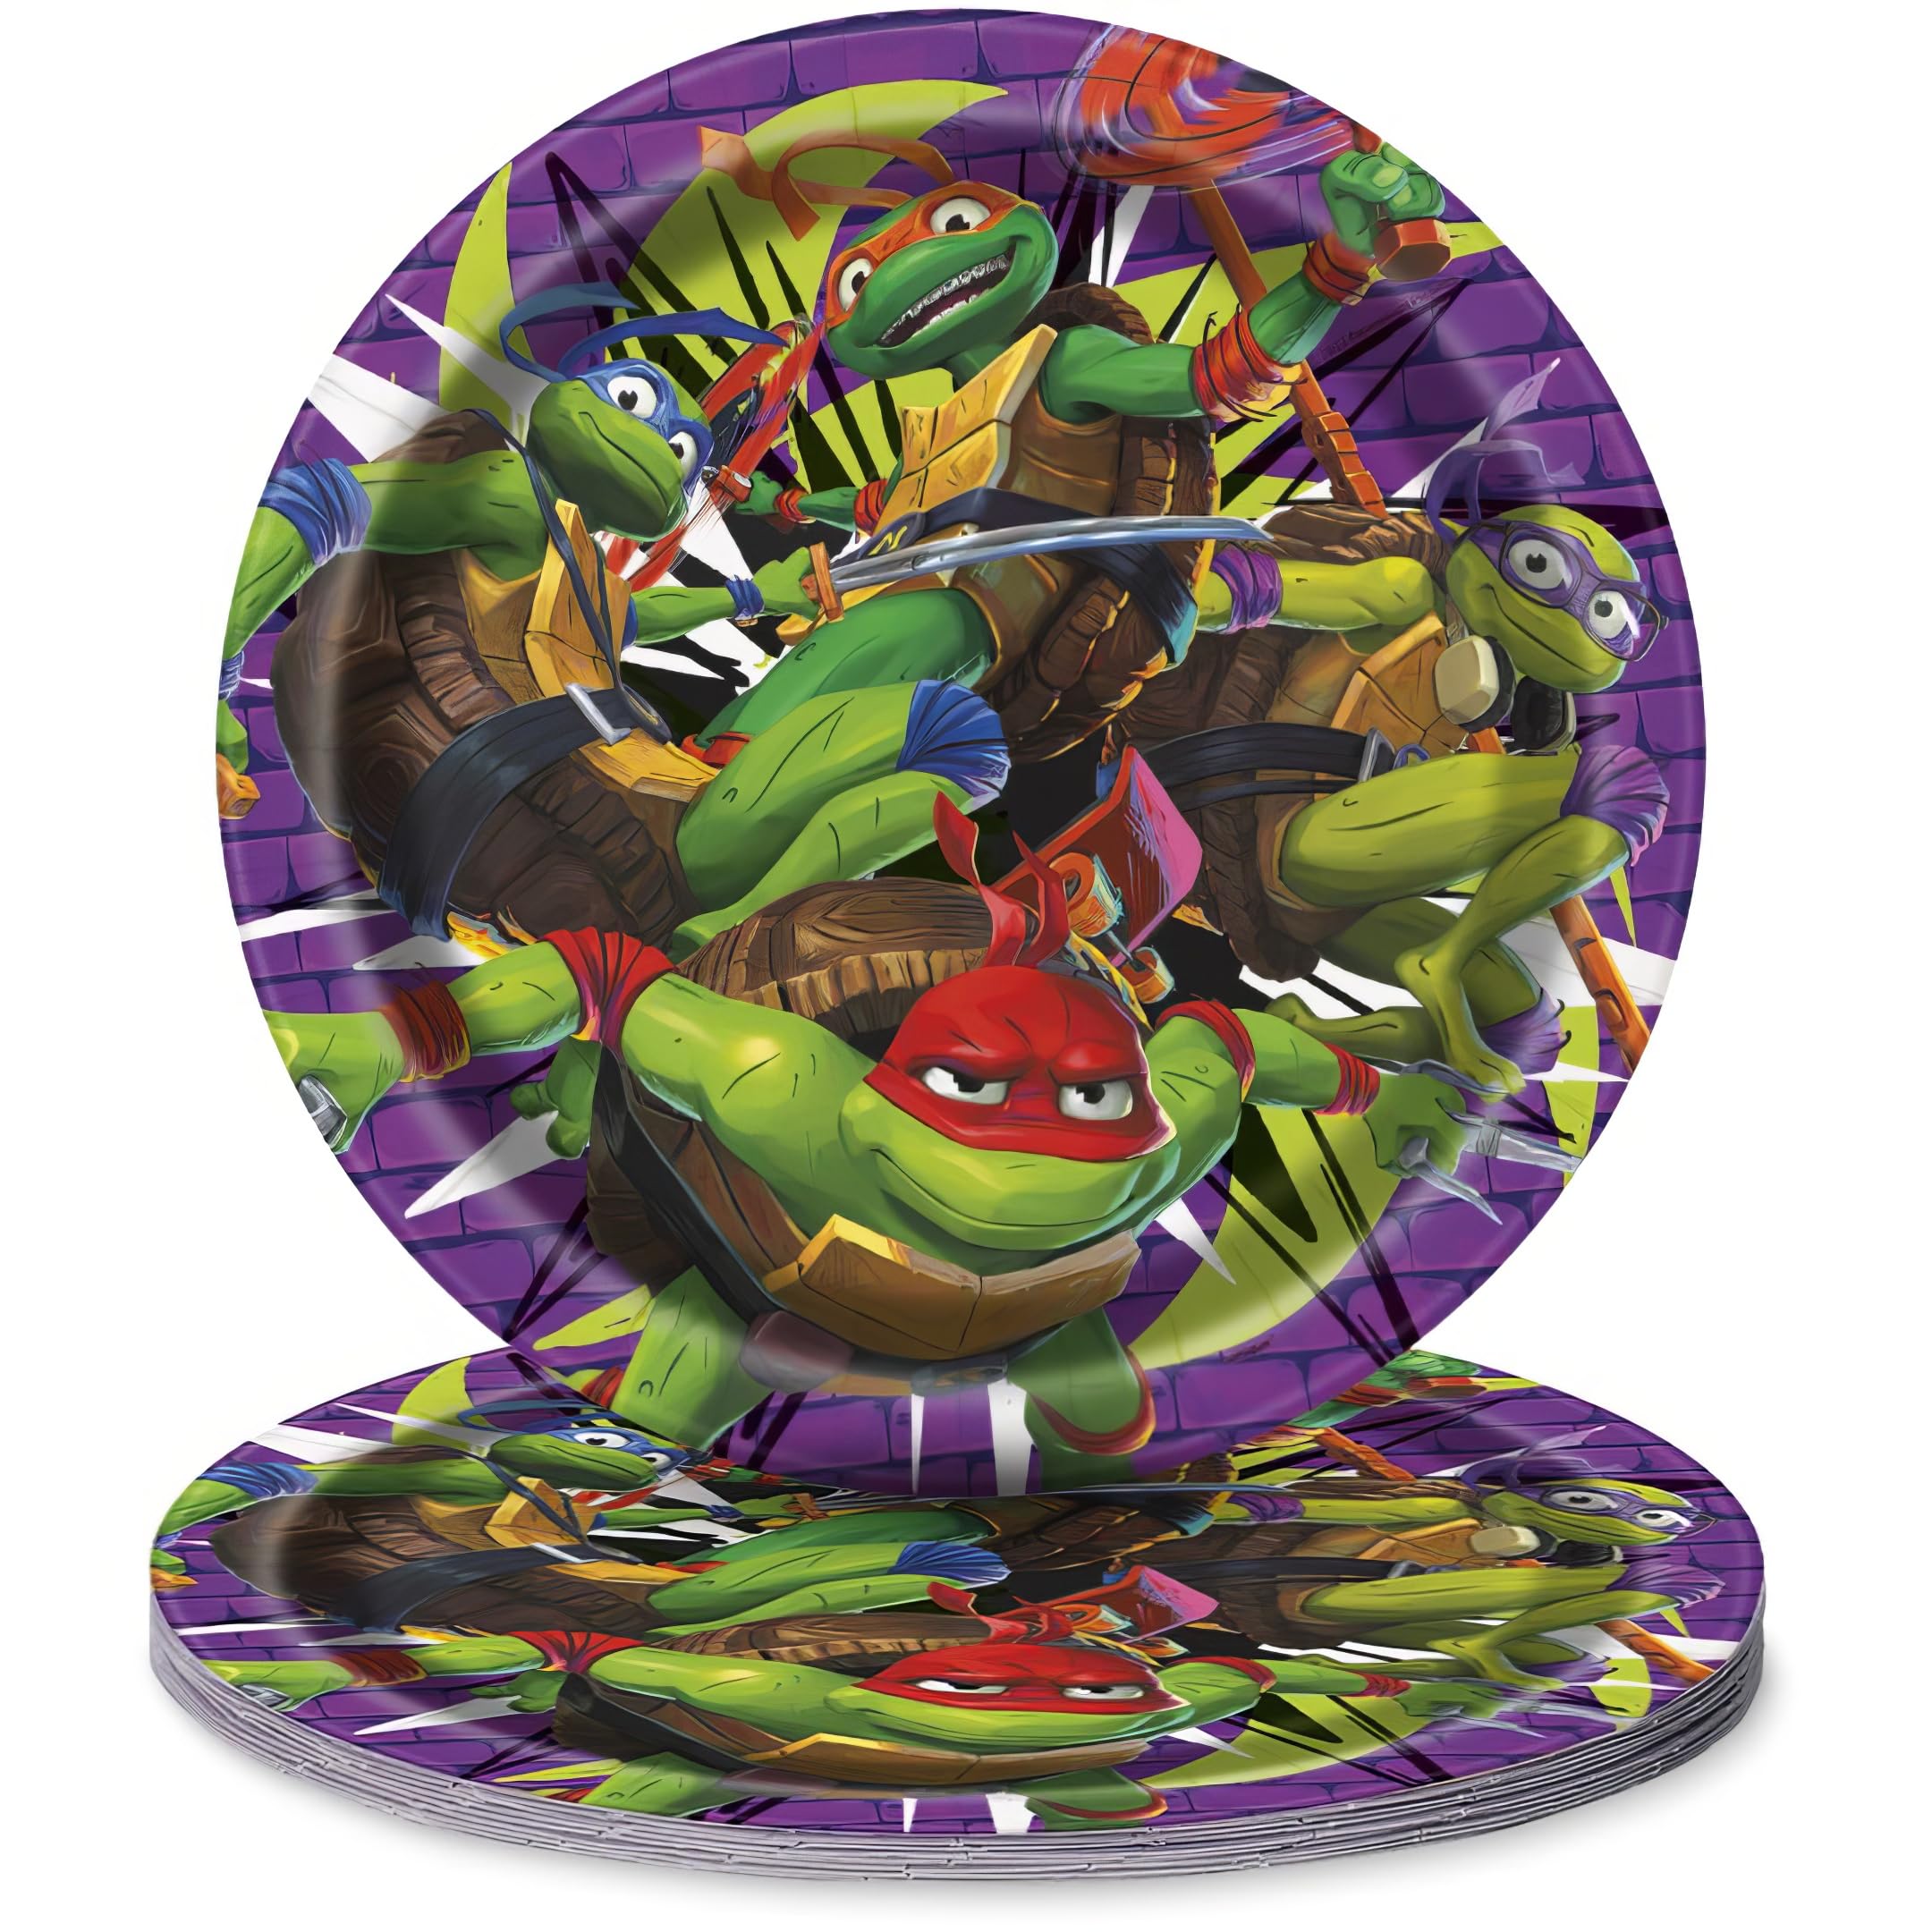 Unique Industries Teenage Mutant Ninja Turtles Round Disposable Dinner Paper Plates - 9